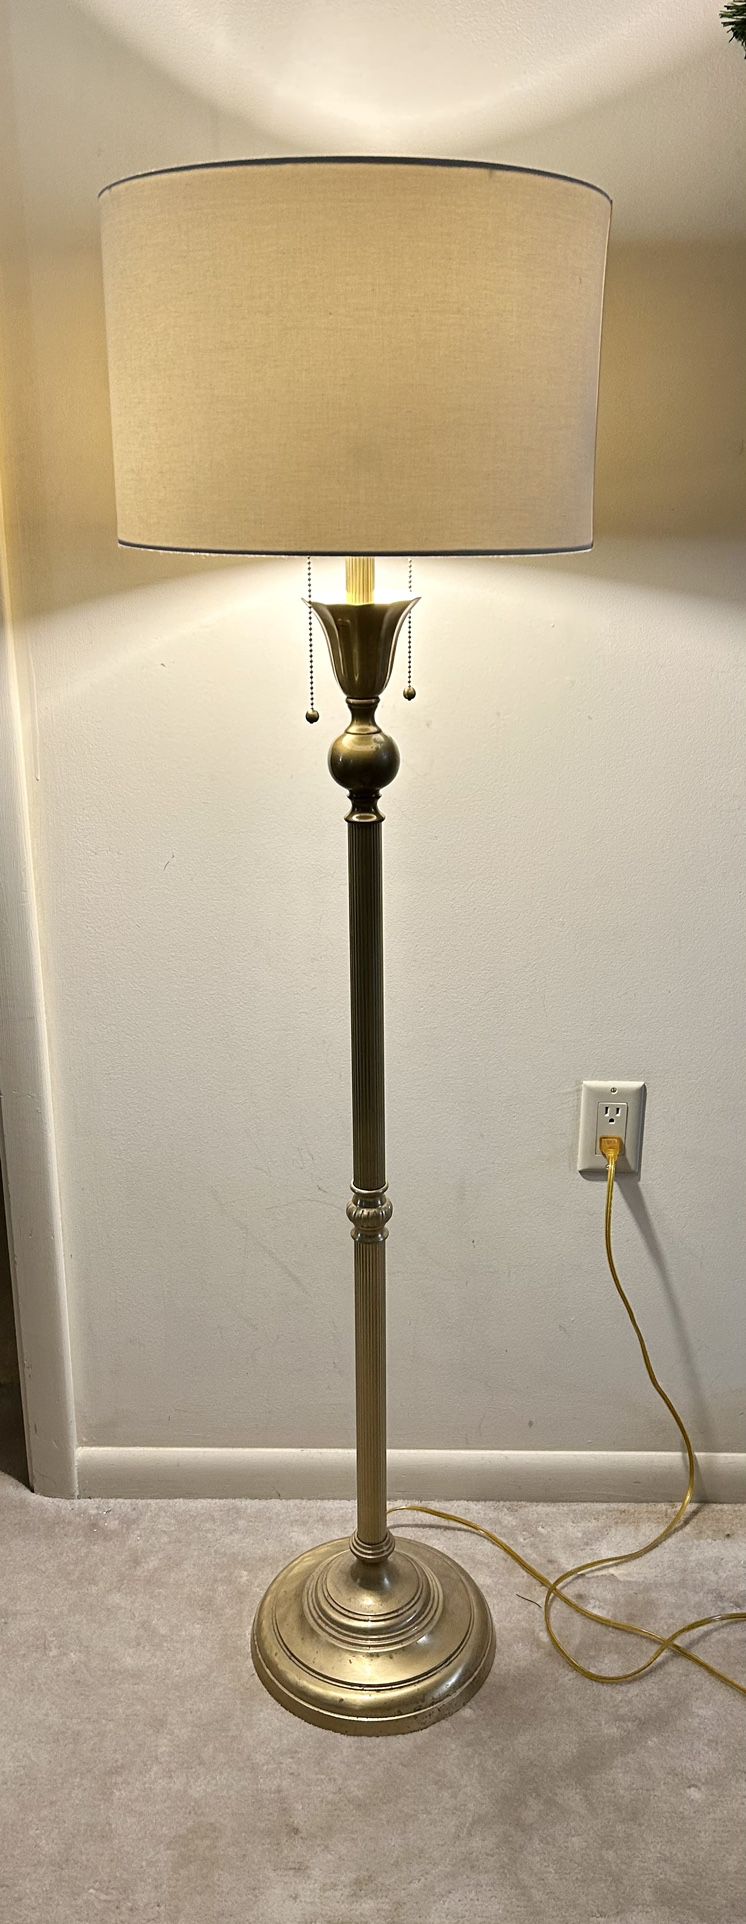 Vintage Good  Lamp Shade   Good Condition 